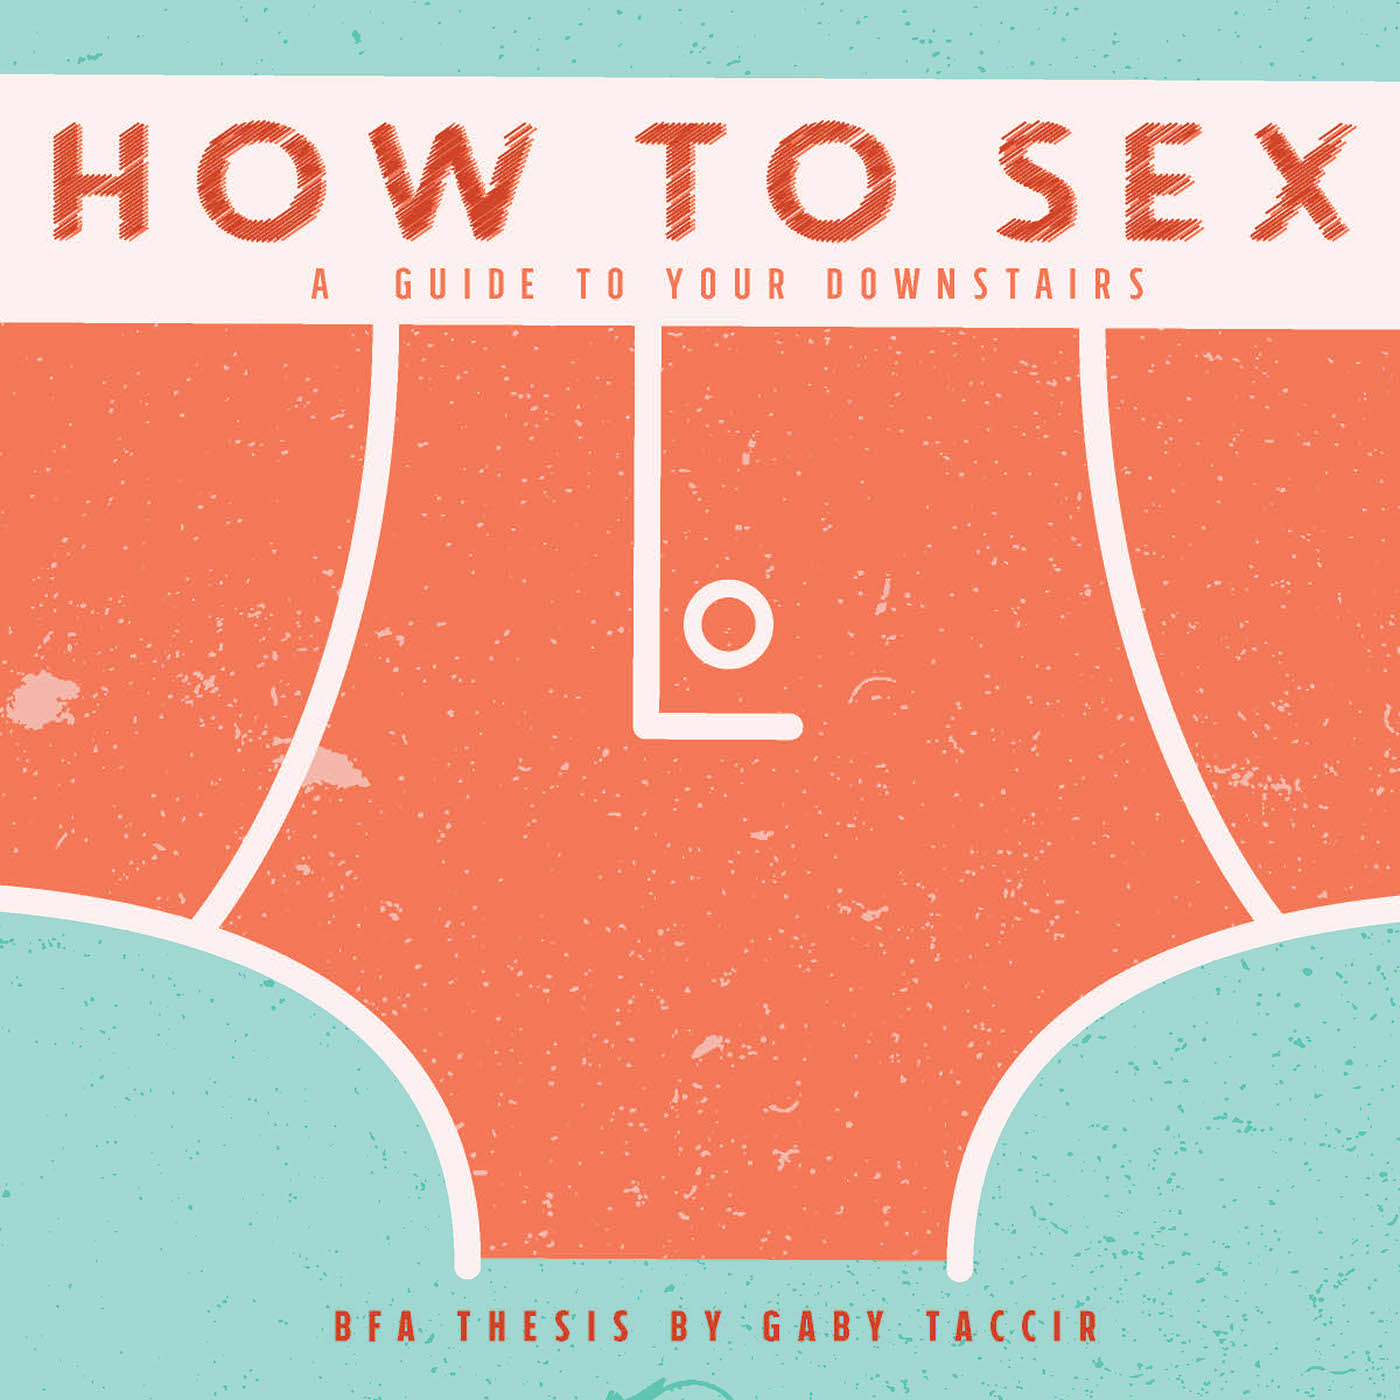 sex reproductive health sex education cute Inclusive vector based